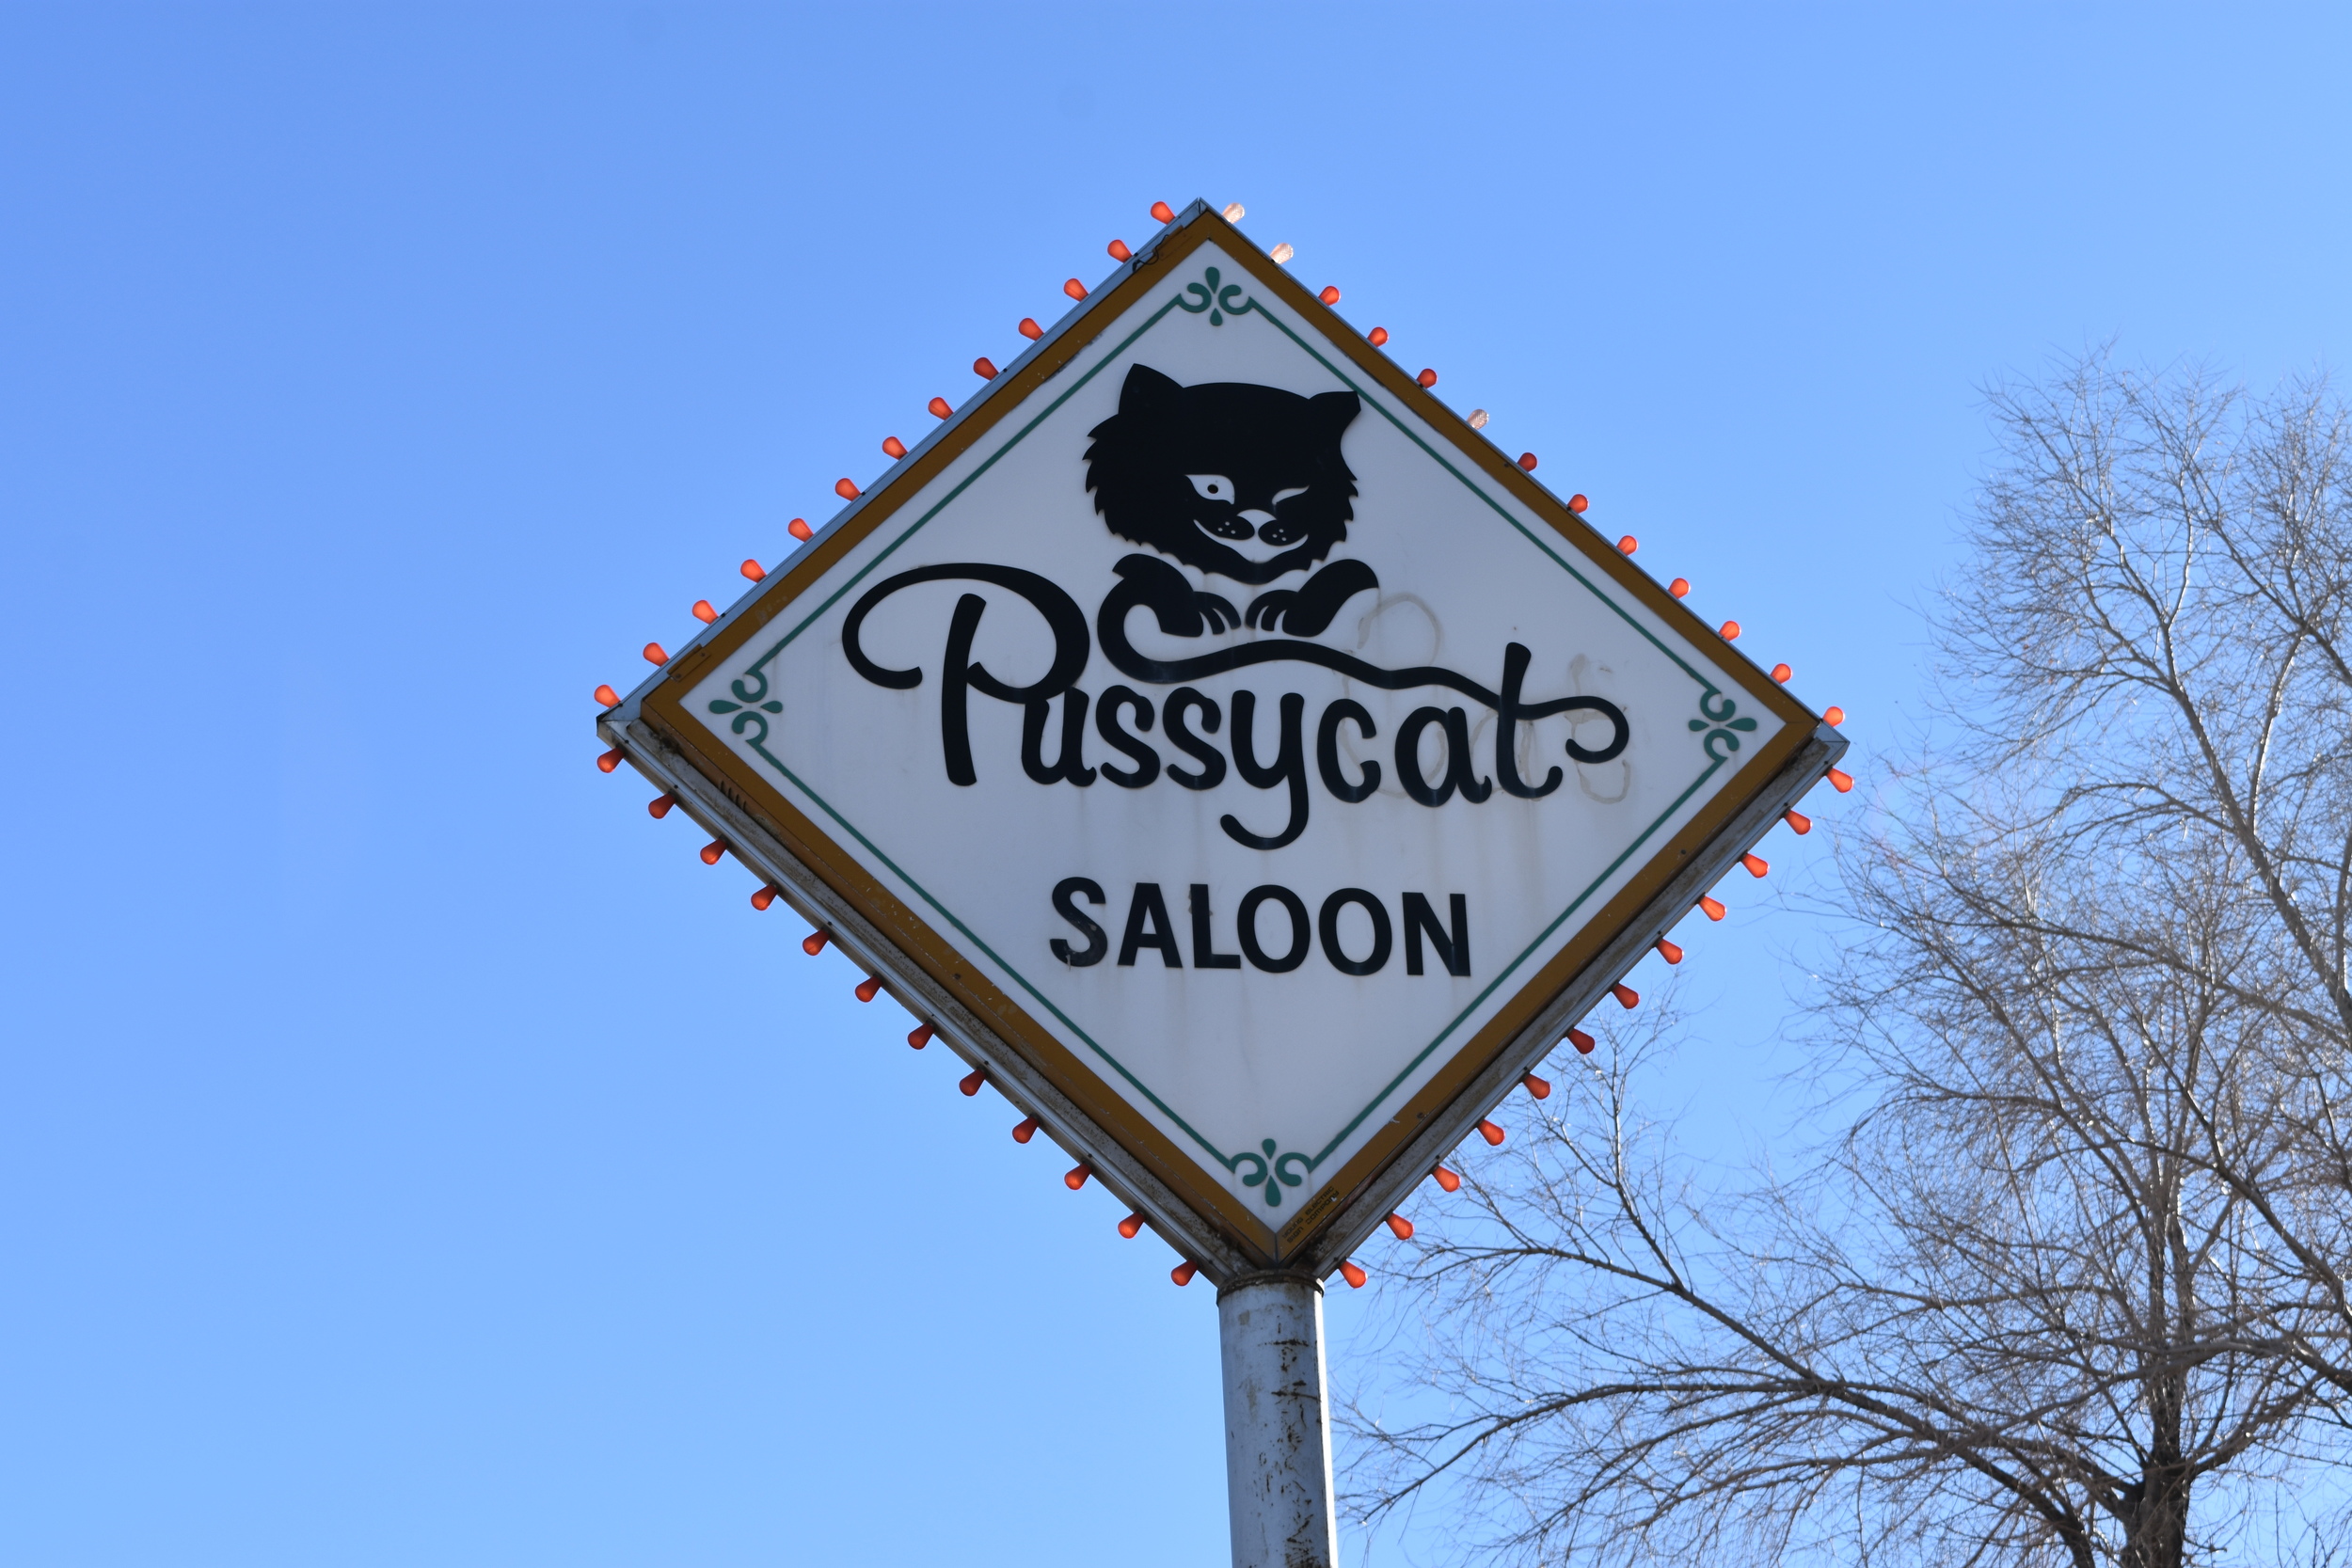 Pussycat Saloon mounted sign, Winnemucca, Nevada